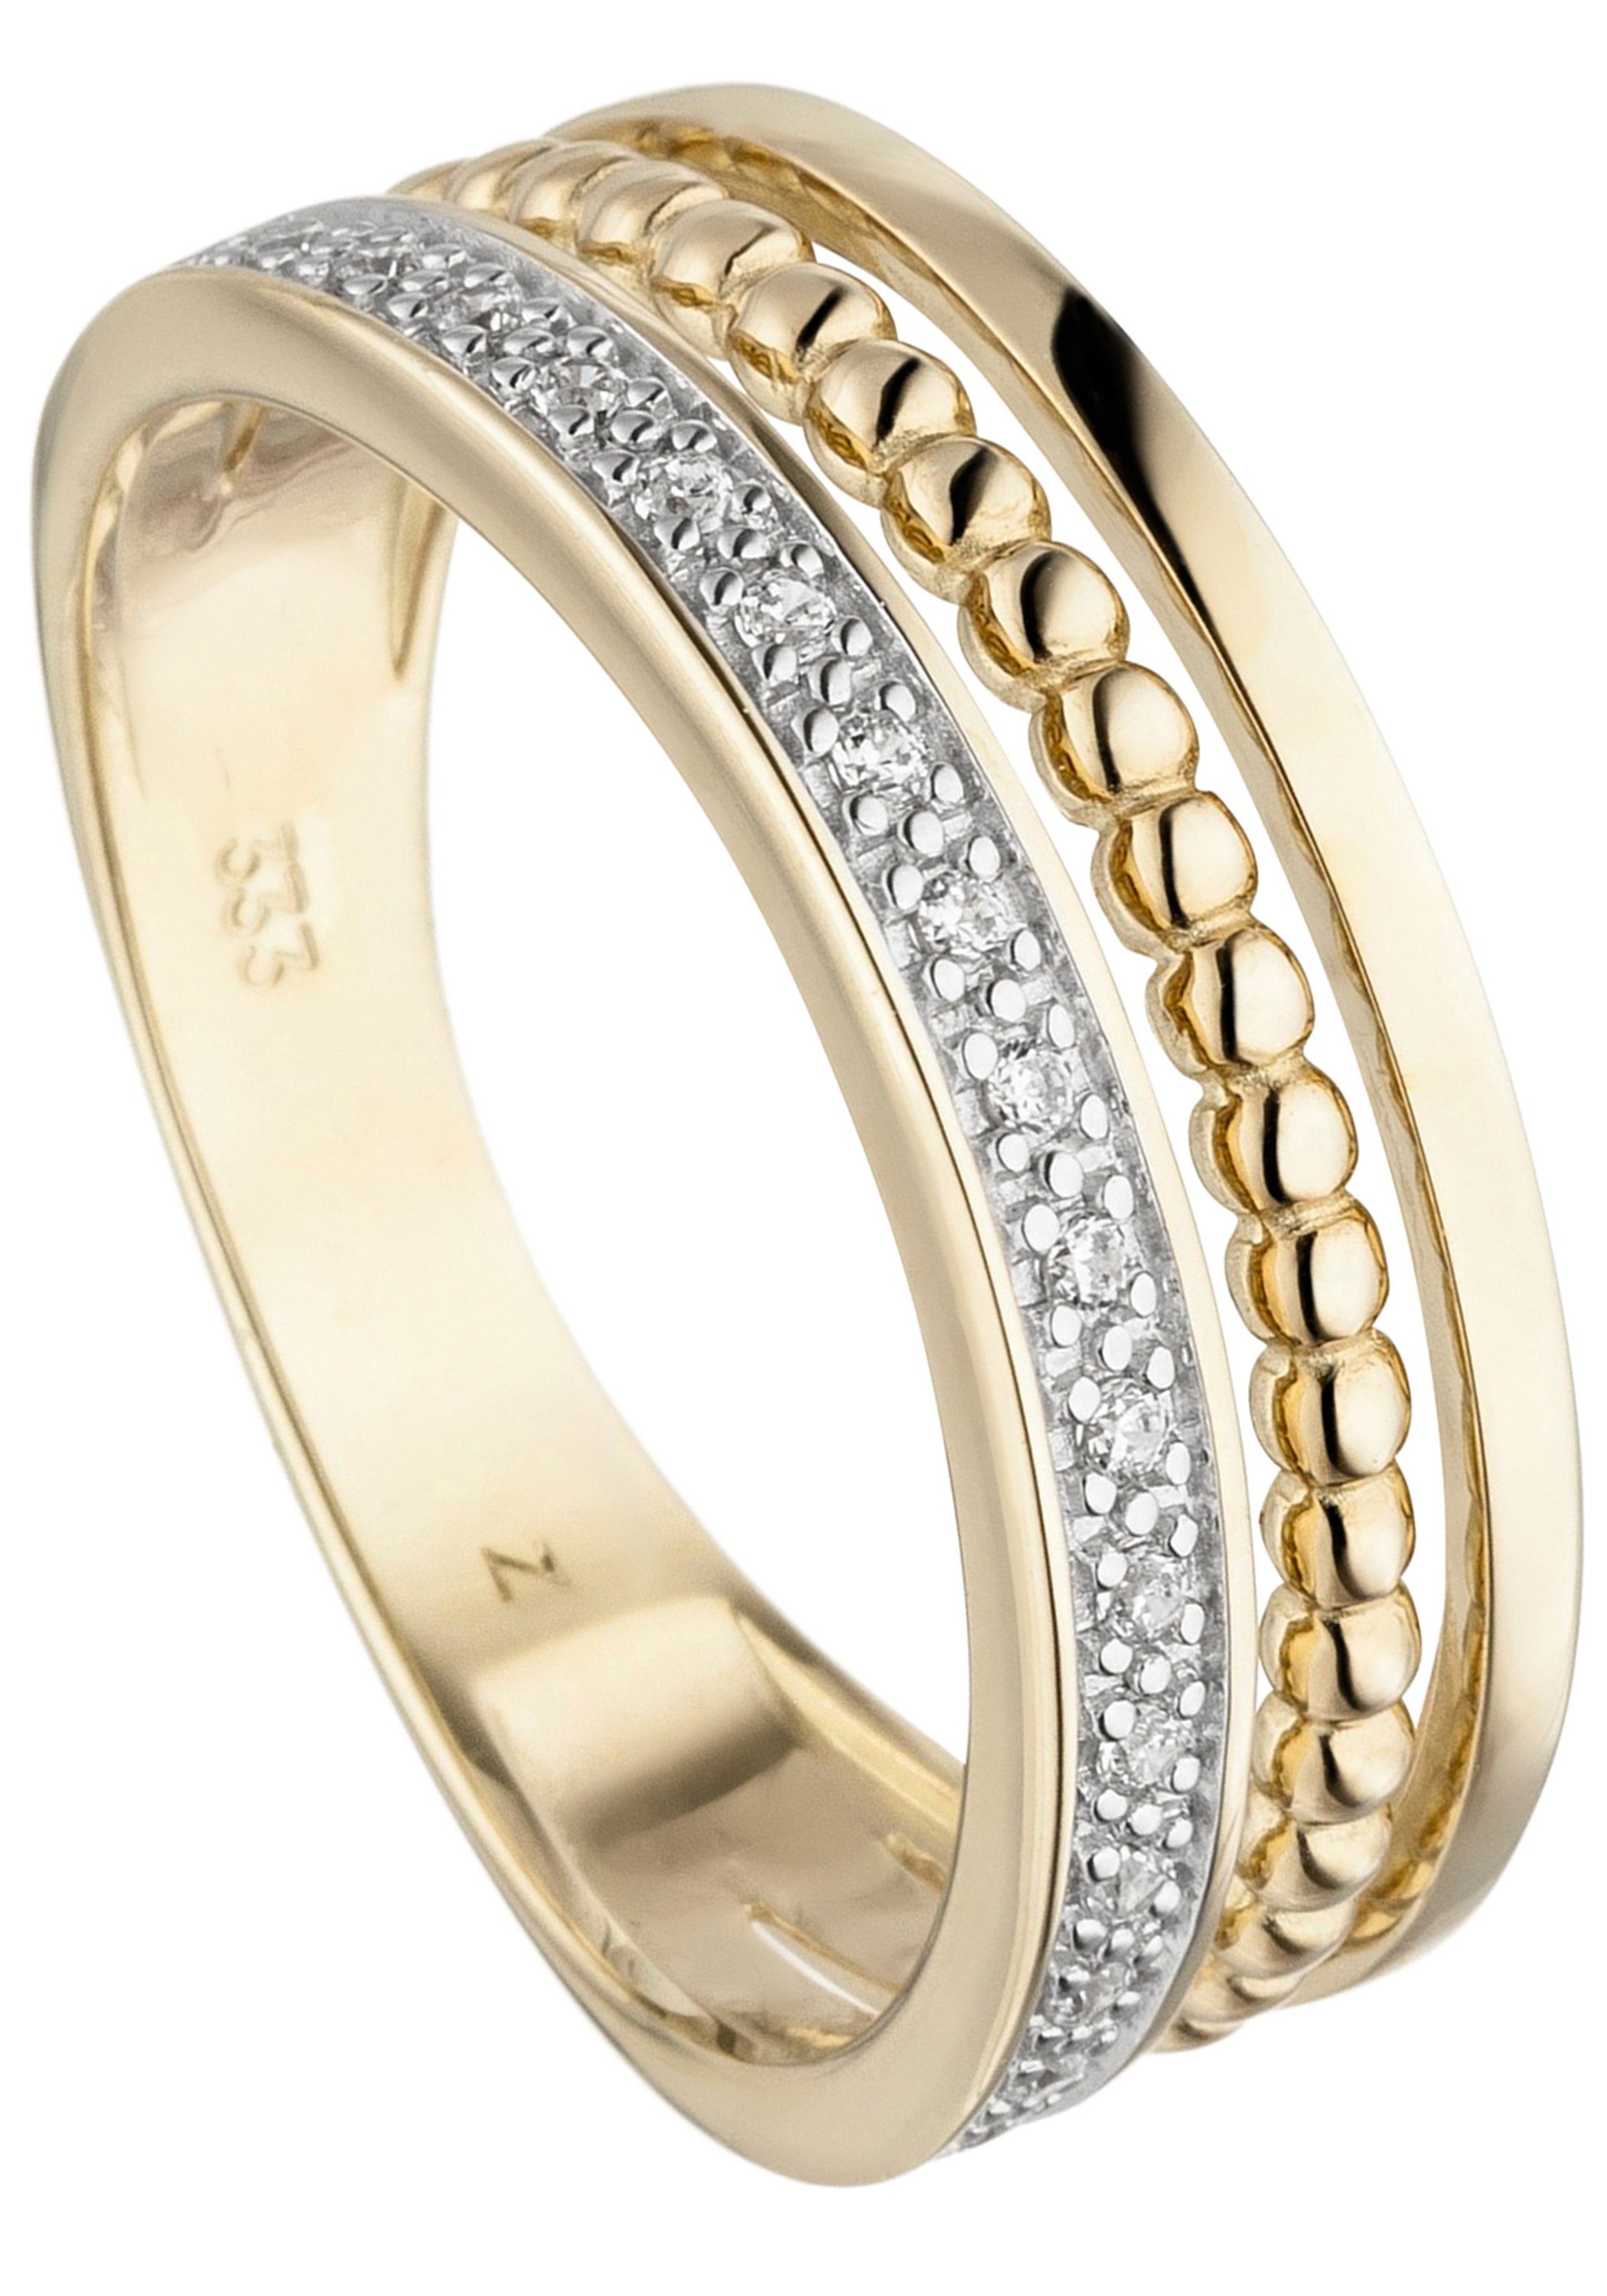 JOBO Fingerring Ring 333 Zirkonia, Gold 17 bicolor mit